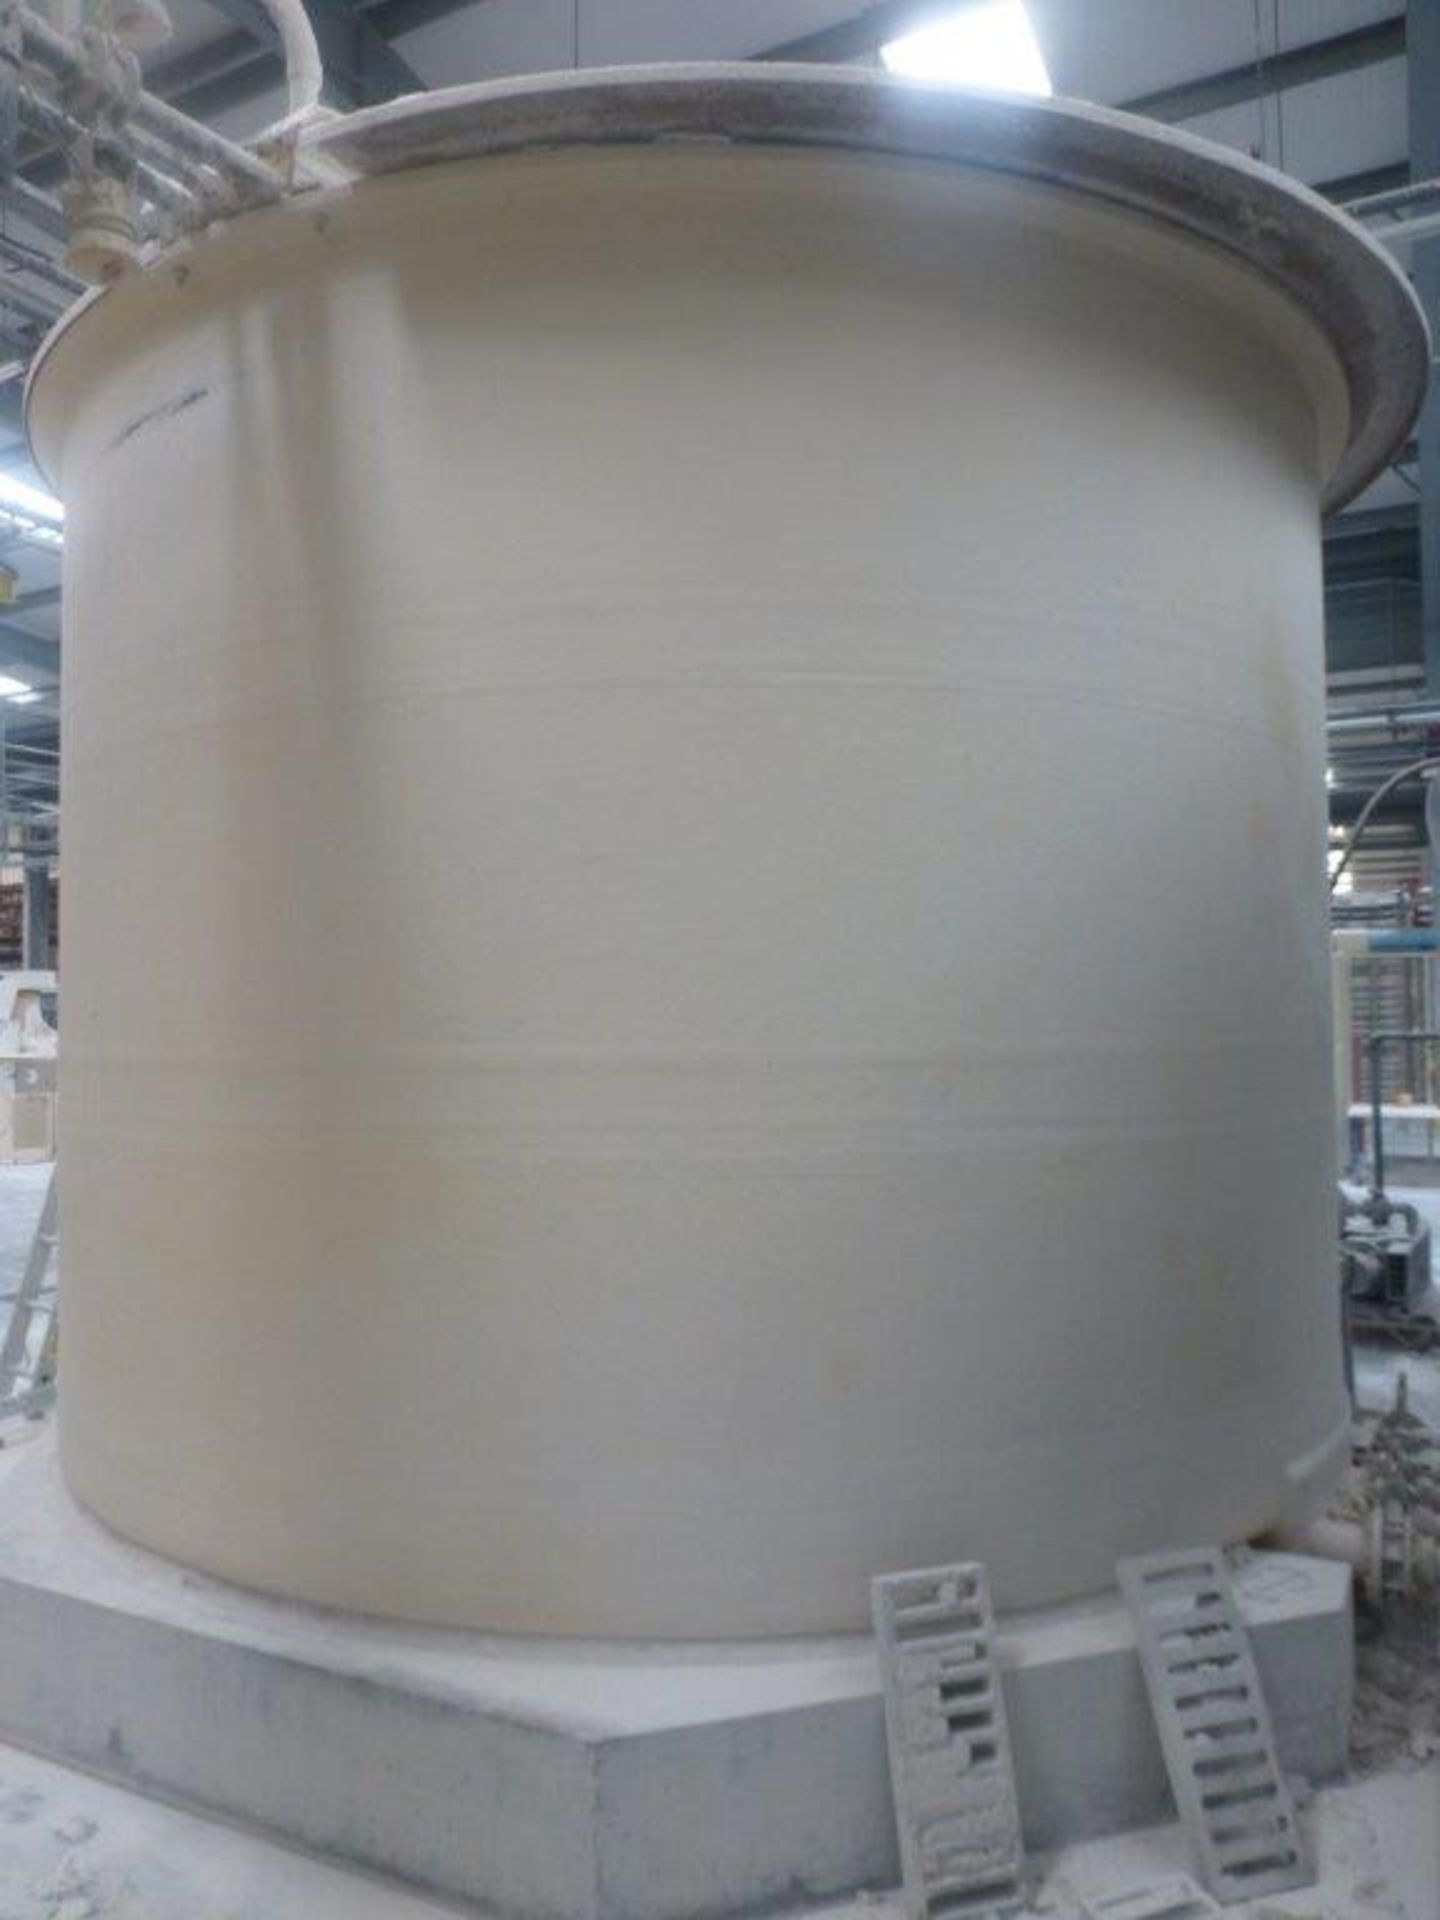 Northern Plastics 24m GRP storage tank with agitator, plant No SHA2-VIT PRESS TANK 1 with piping - Image 2 of 3